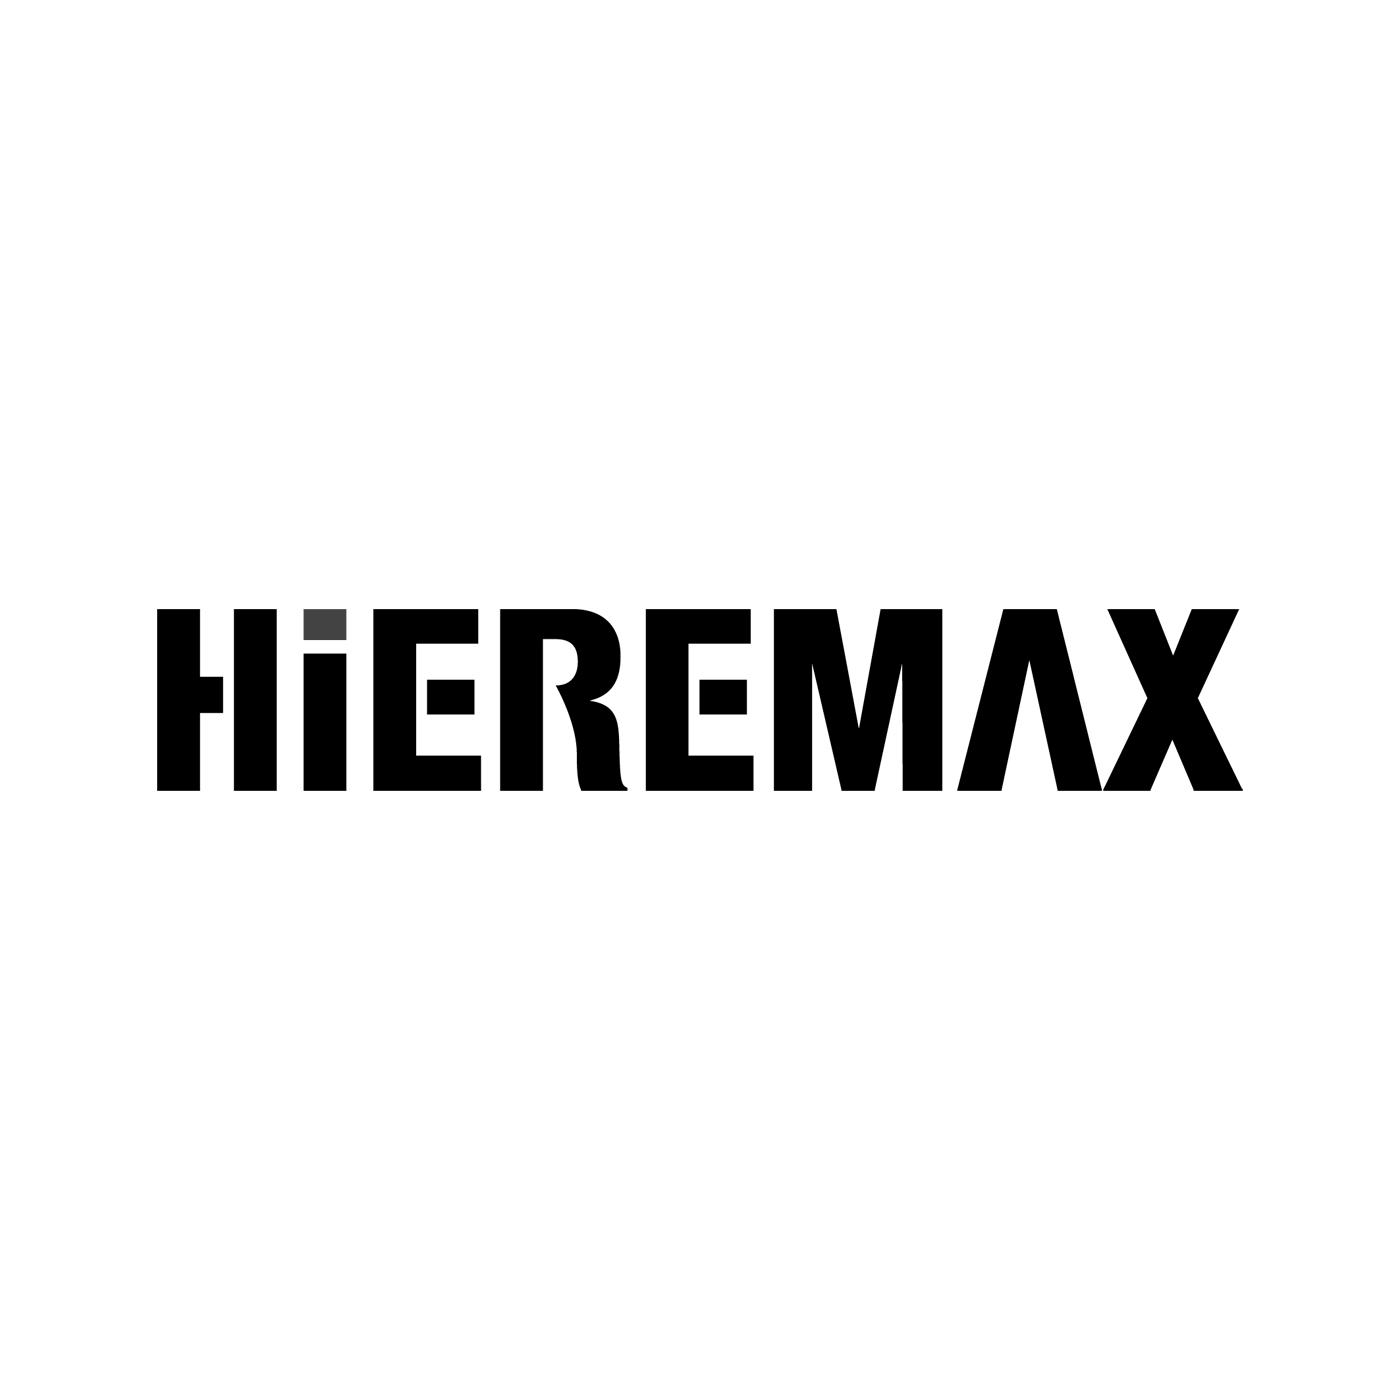 HIEREMAX商标转让